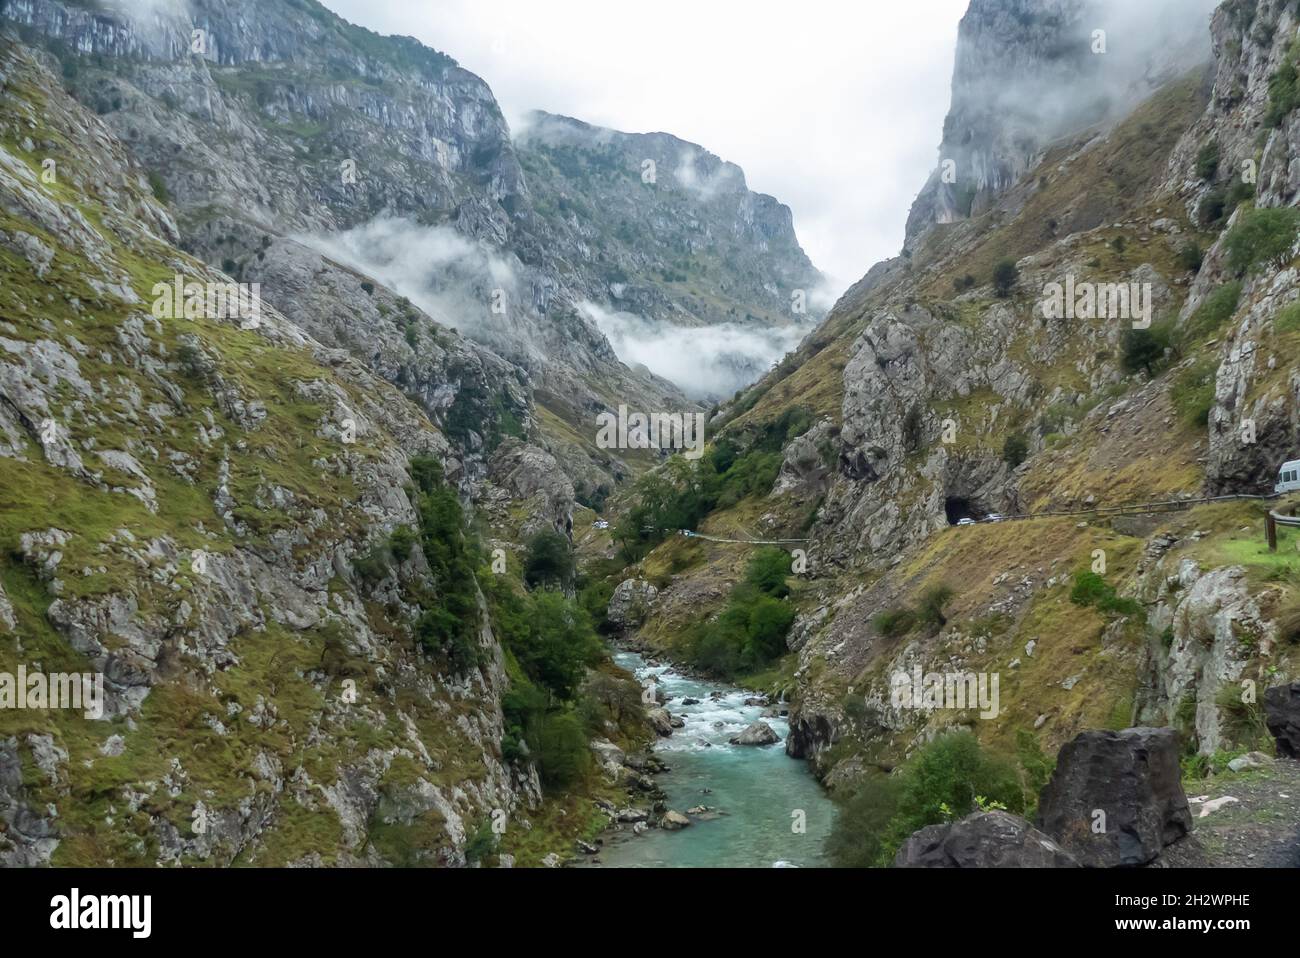 Asturias in Spain: The Ruta de Cares and the Rio Cares gorge. Stock Photo